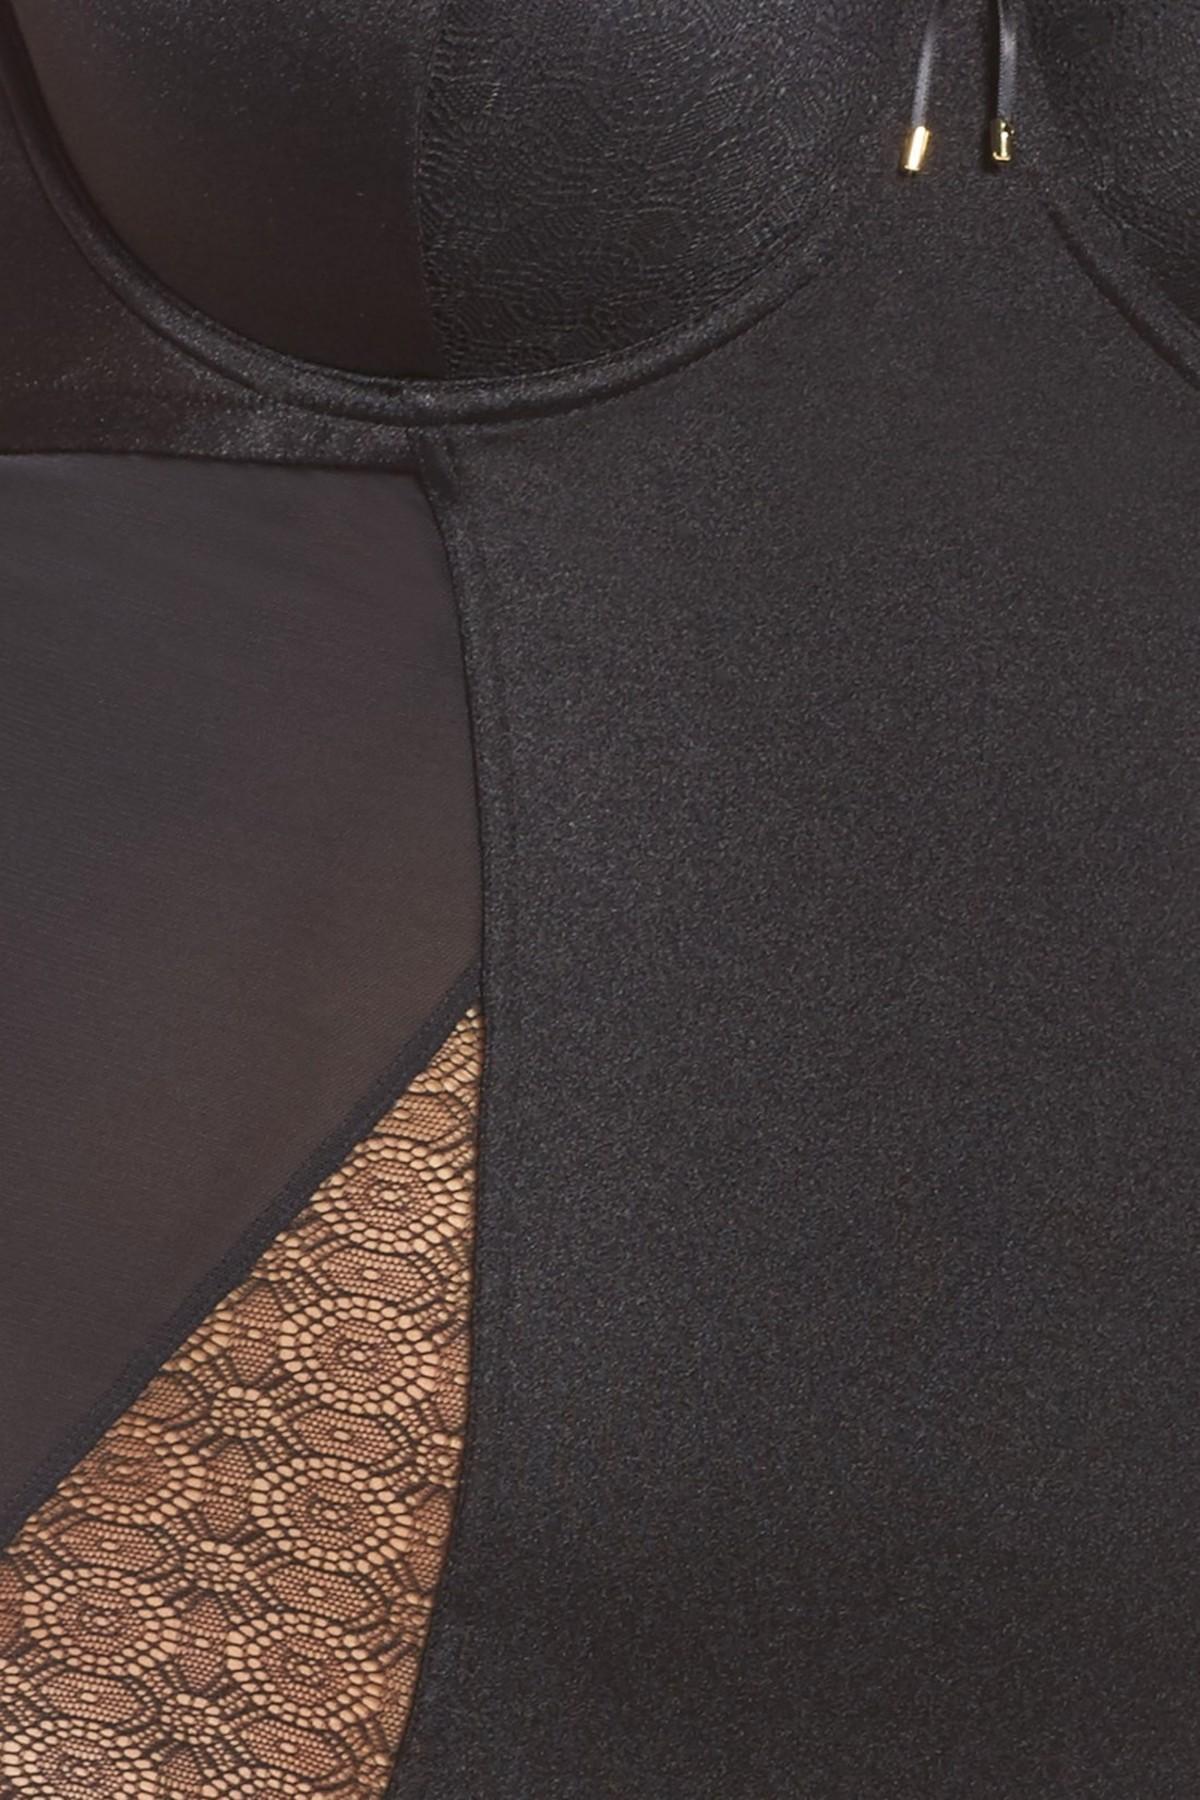 Ashley Graham Curvy Couture 751805 Bodysuit Removable Garters Underwire Black 3X